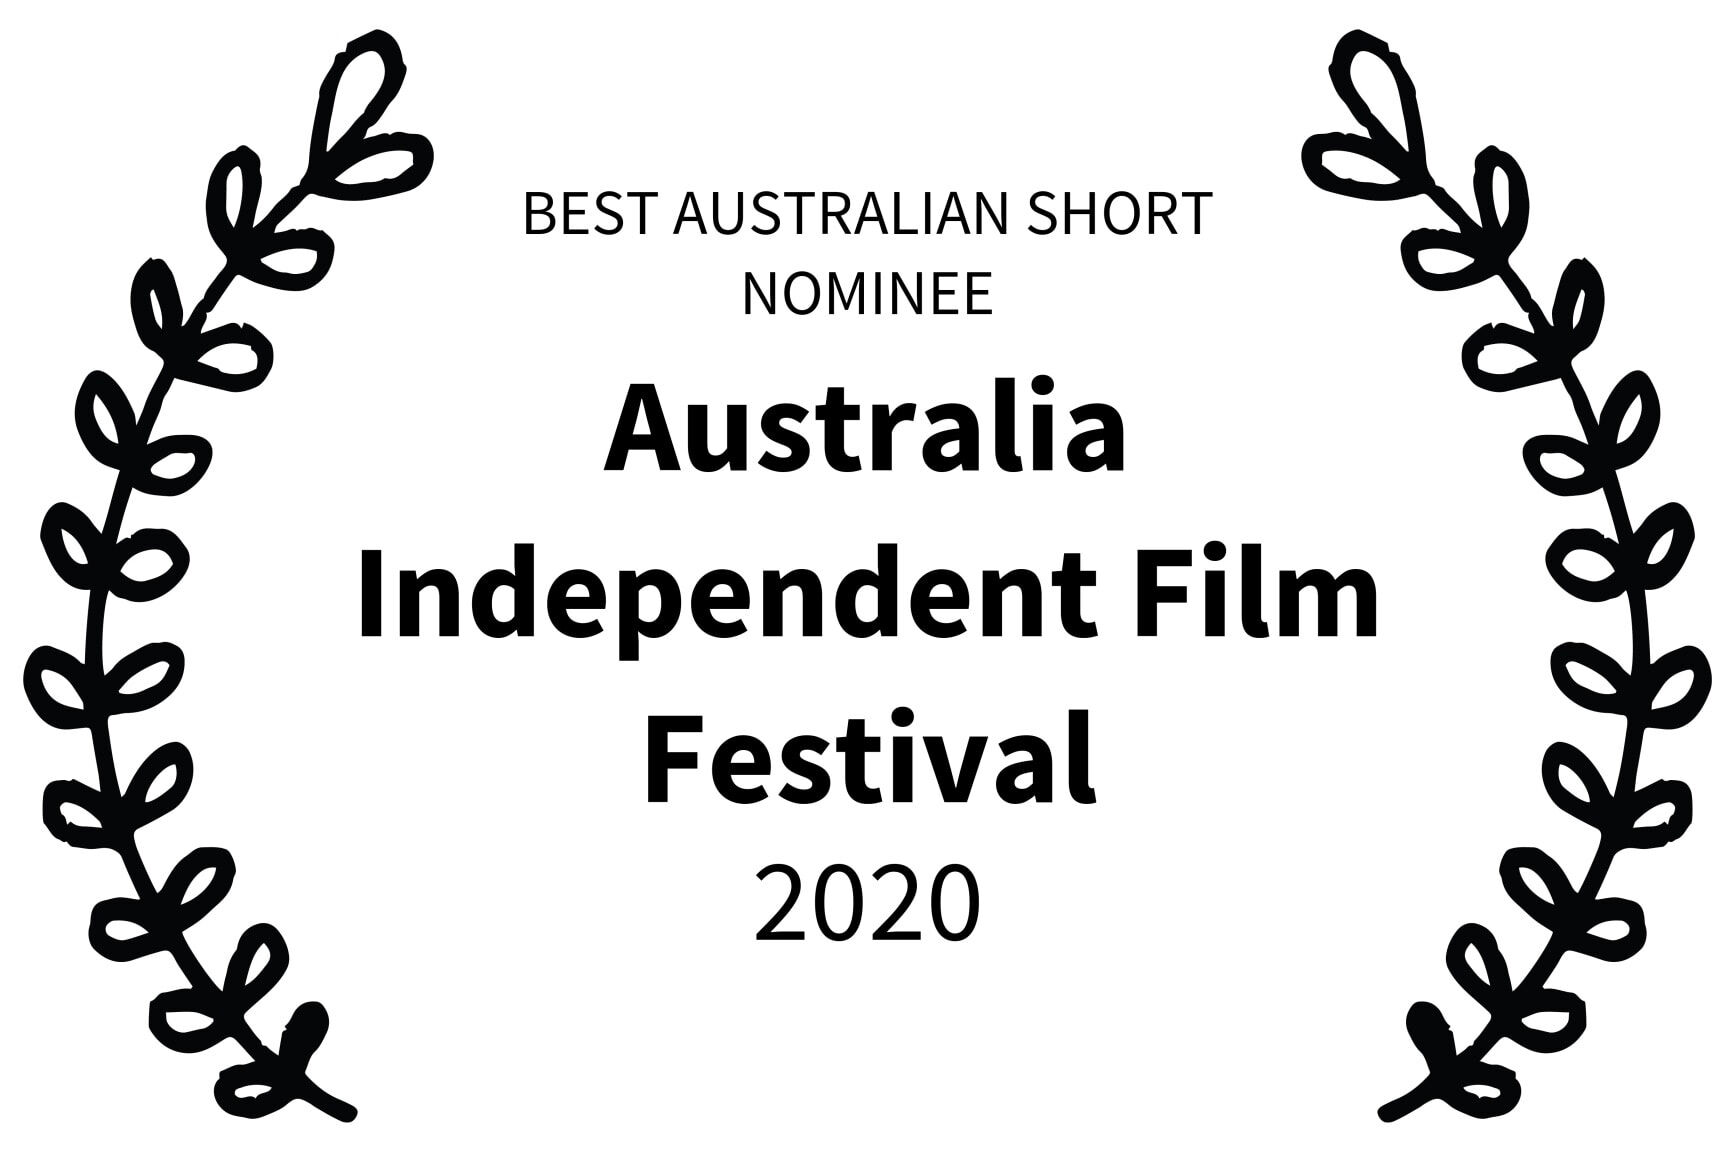 BEST AUSTRALIAN SHORT NOMINEE - Australia Independent Film Festival - 2020